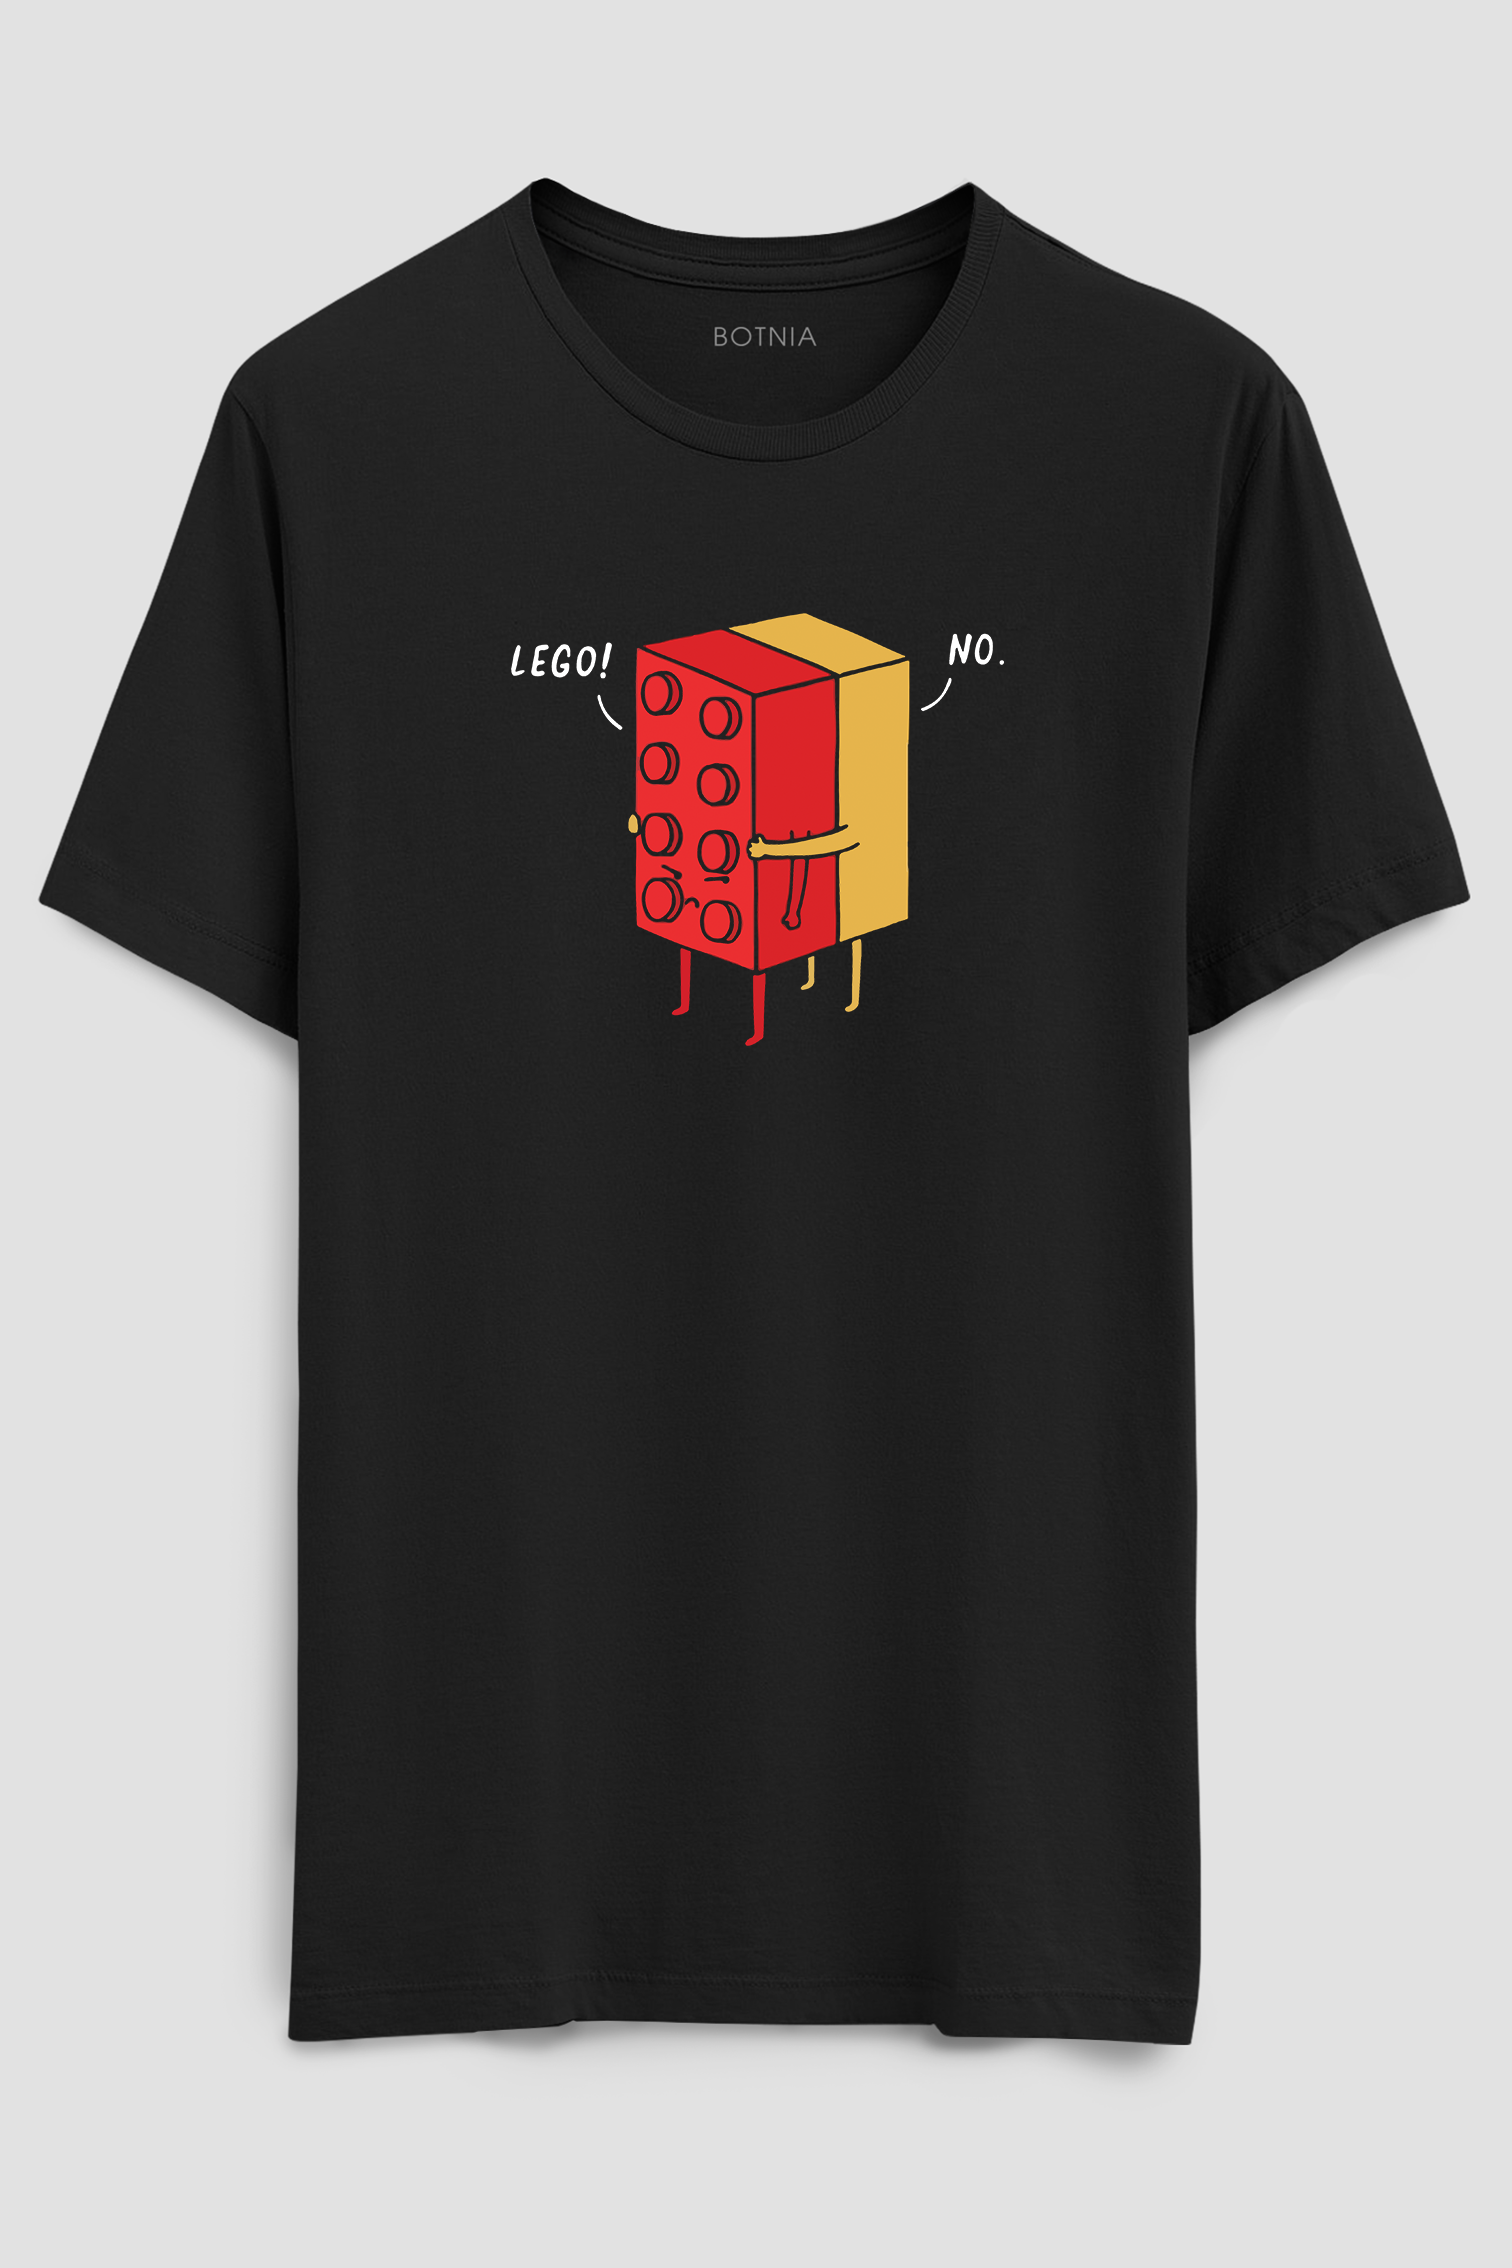 Lego-No : Half sleeve t-shirt